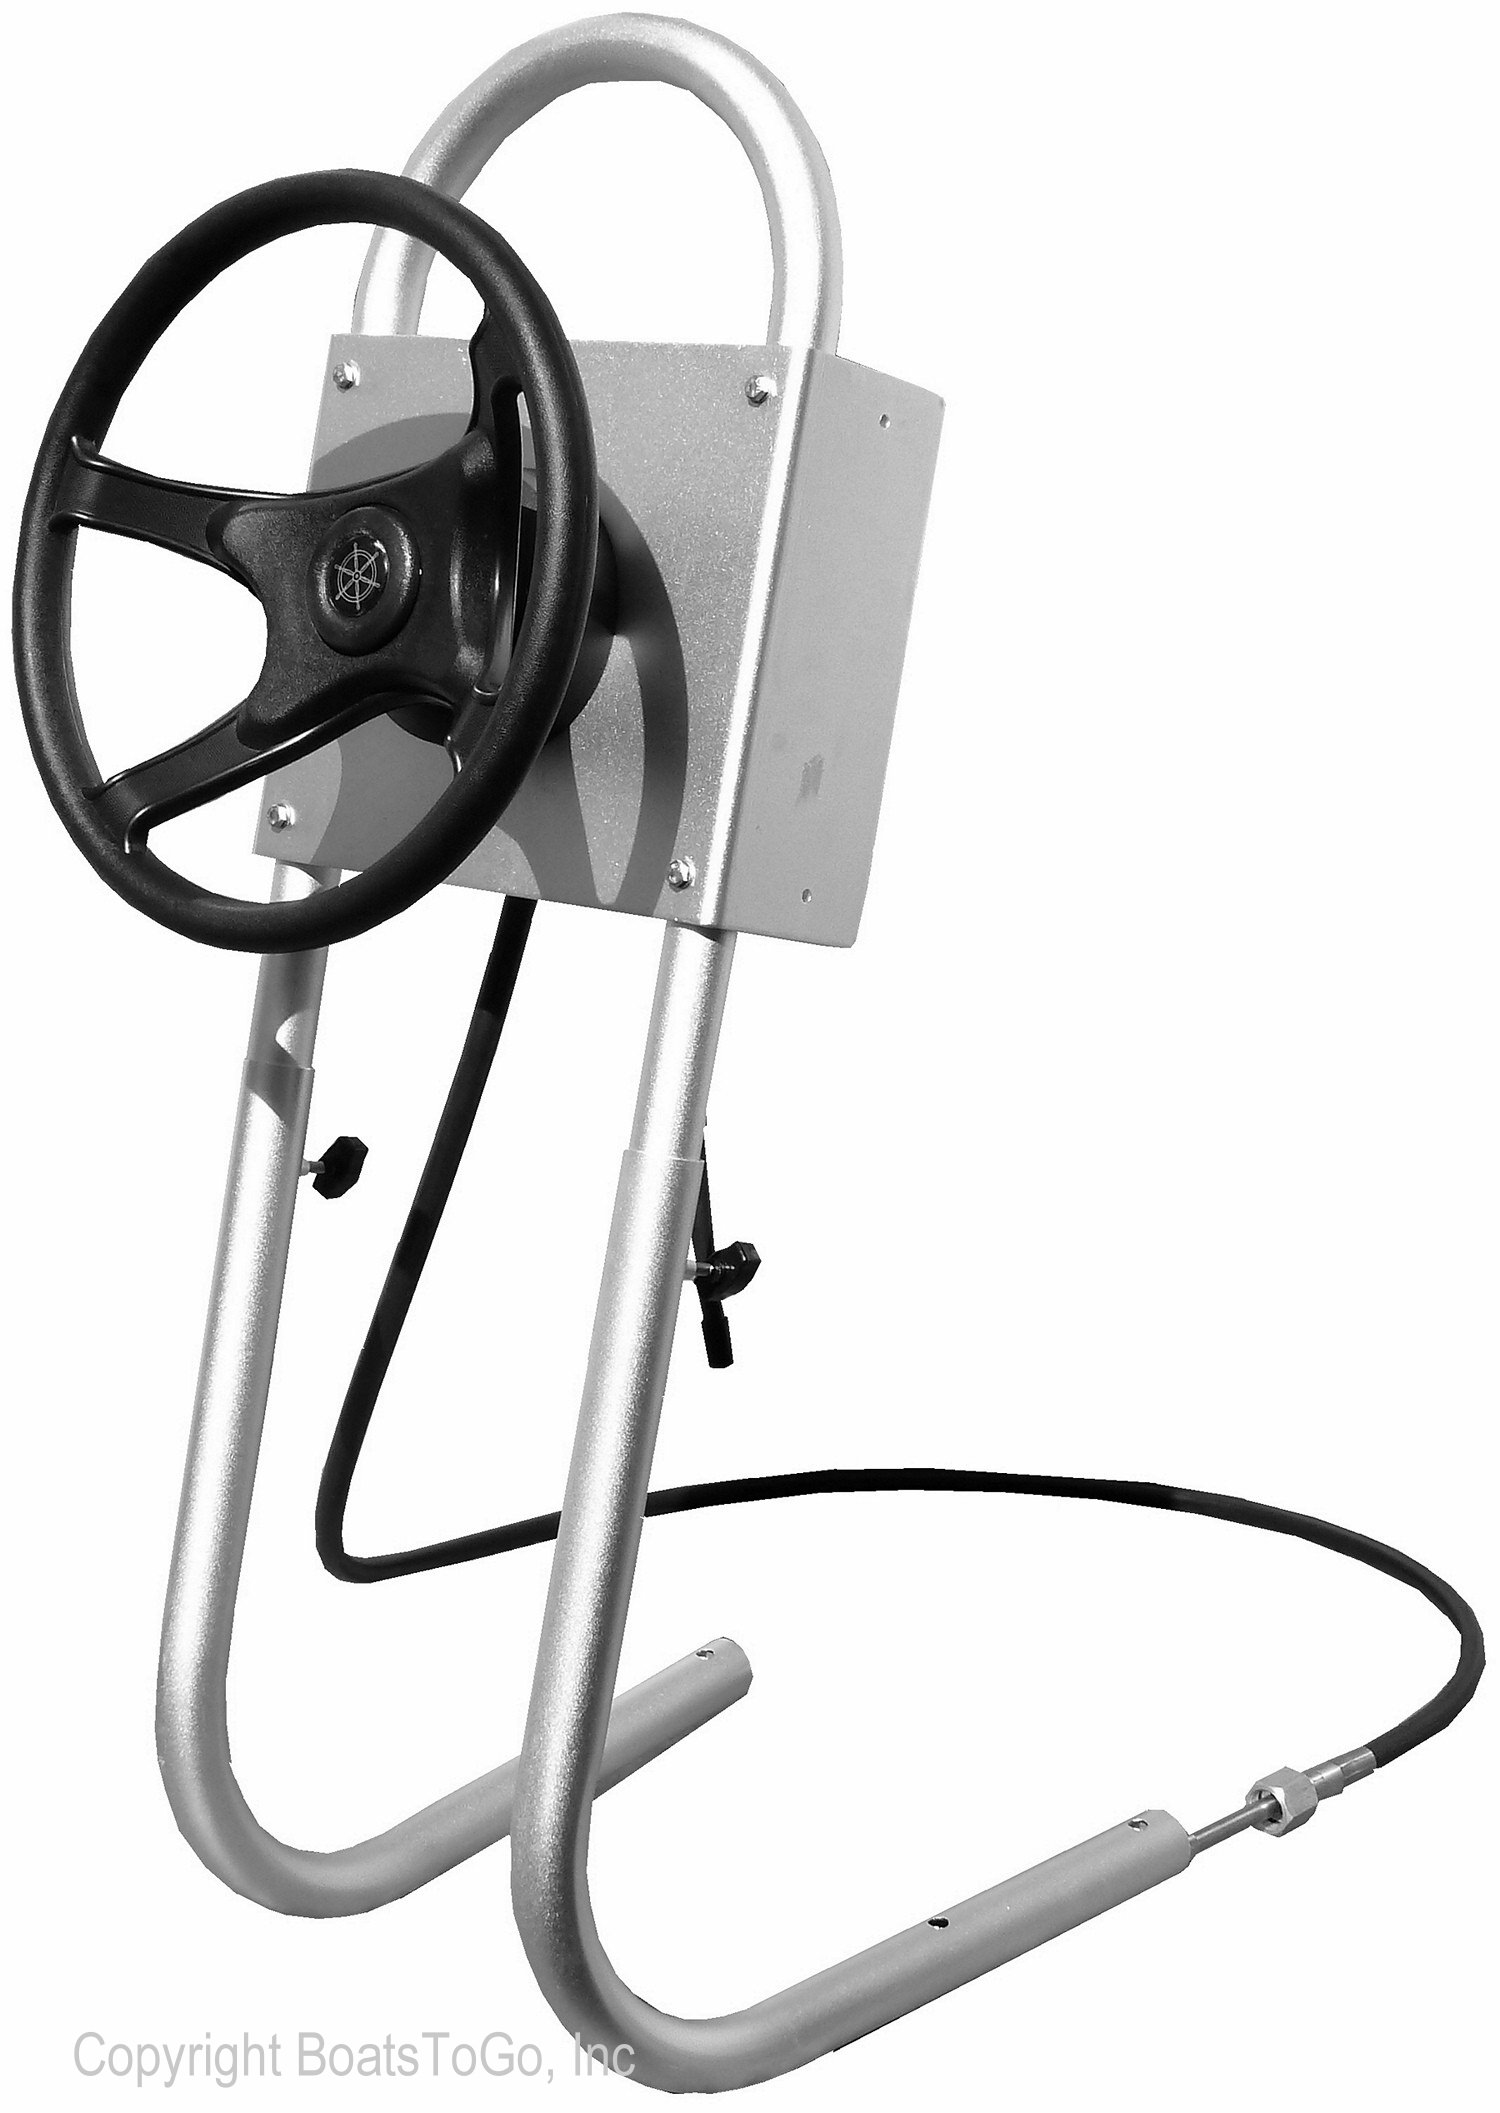 fishing chair hand wheel